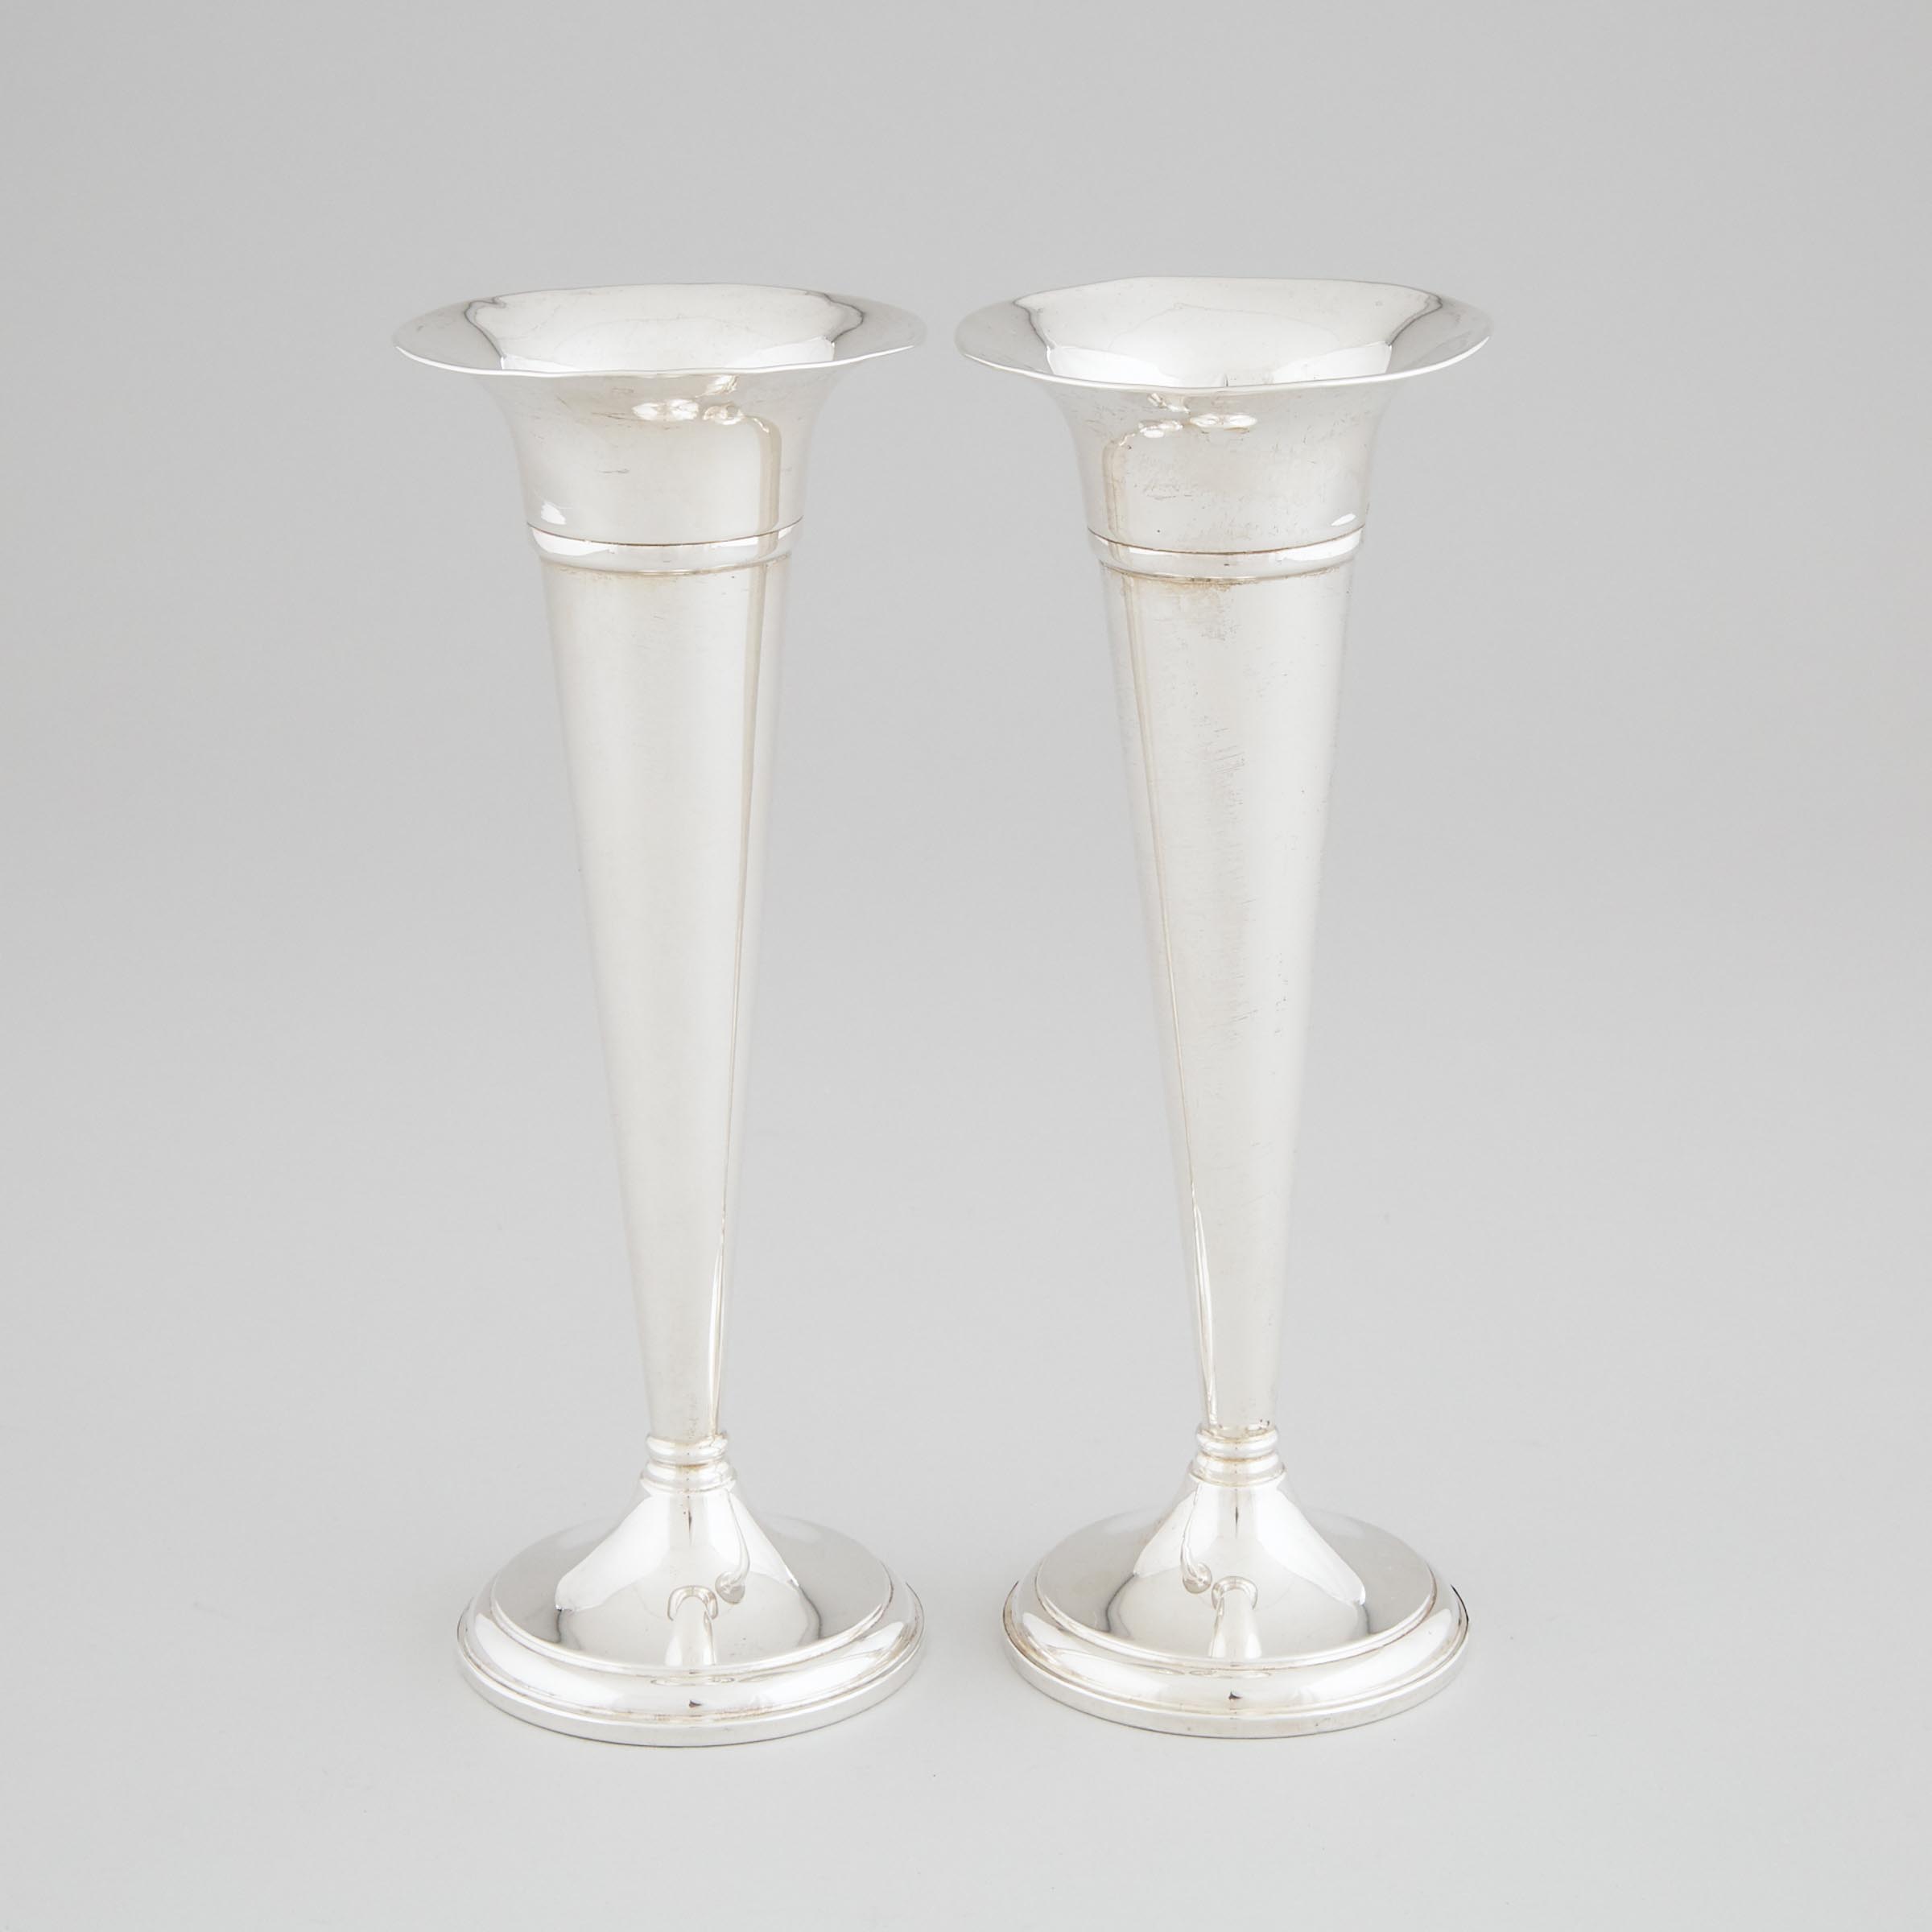 Pair of American Silver Trumpet Vases, Preisner Silver Co., Wallingford, Ct., 20th century